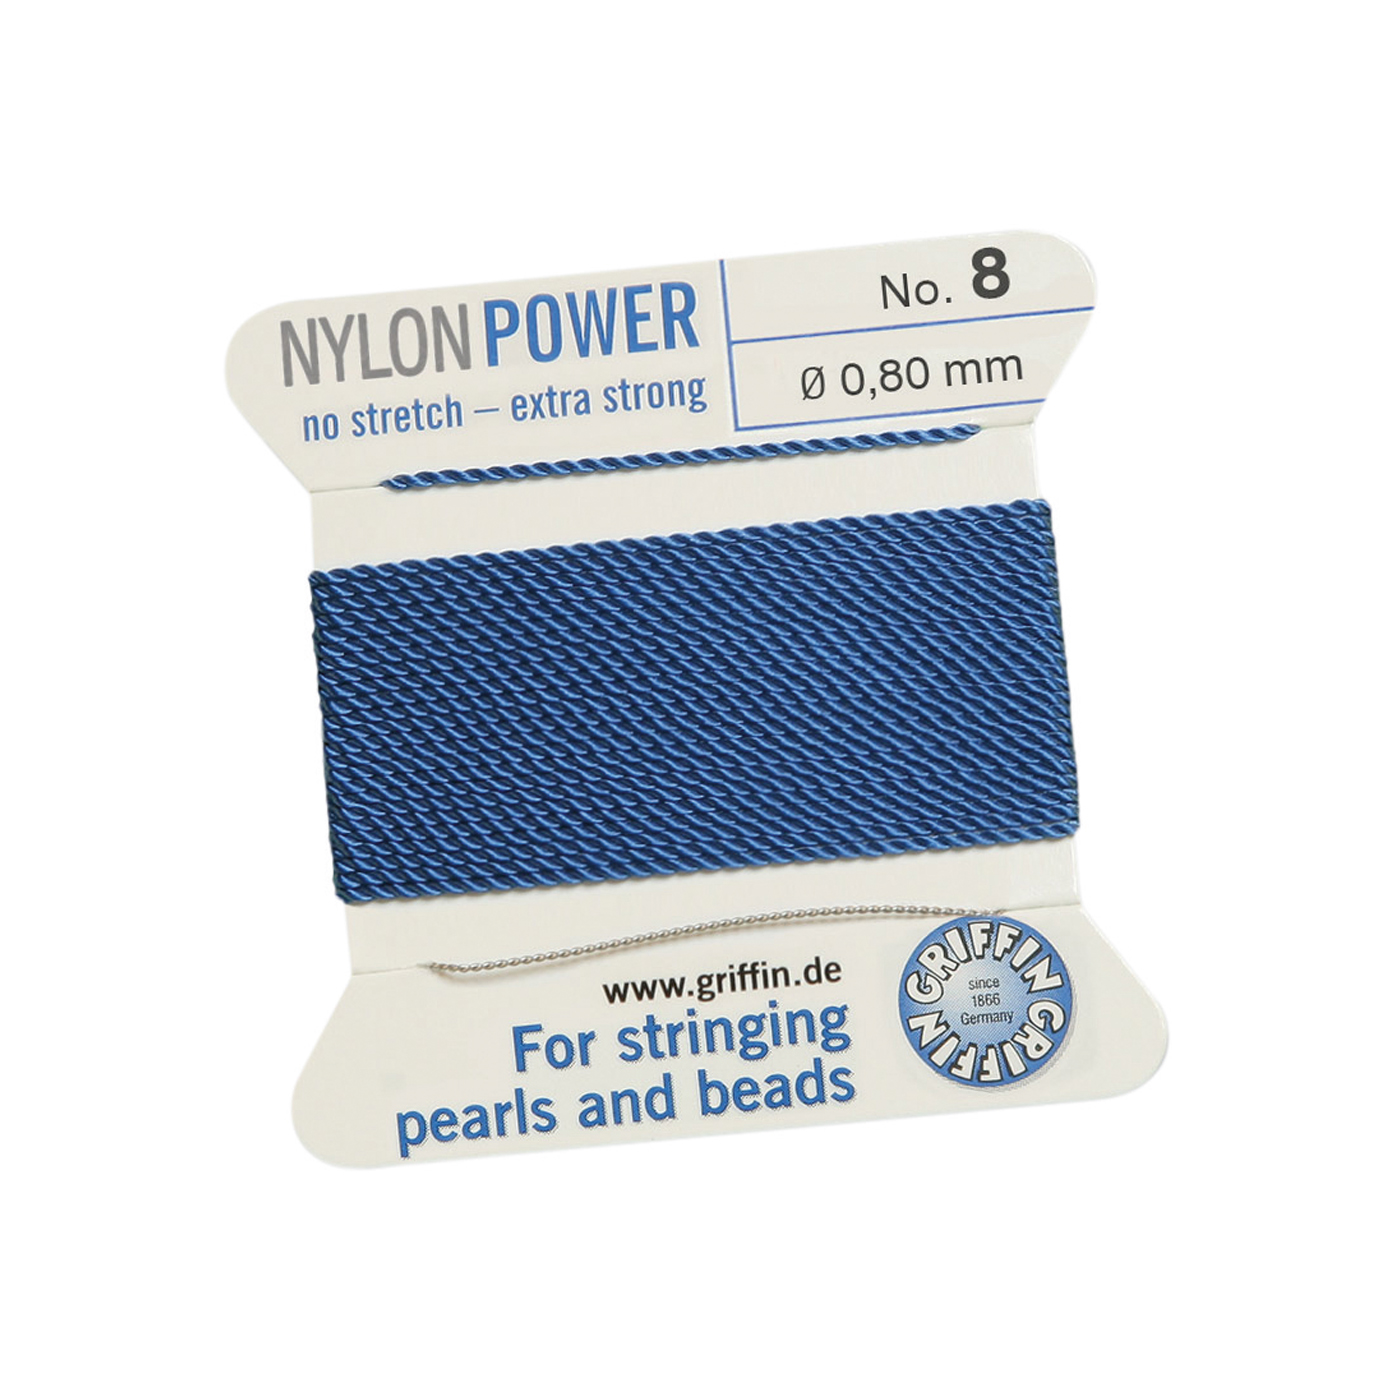 Bead Cord NylonPower, Blue, No. 8 - 2 m